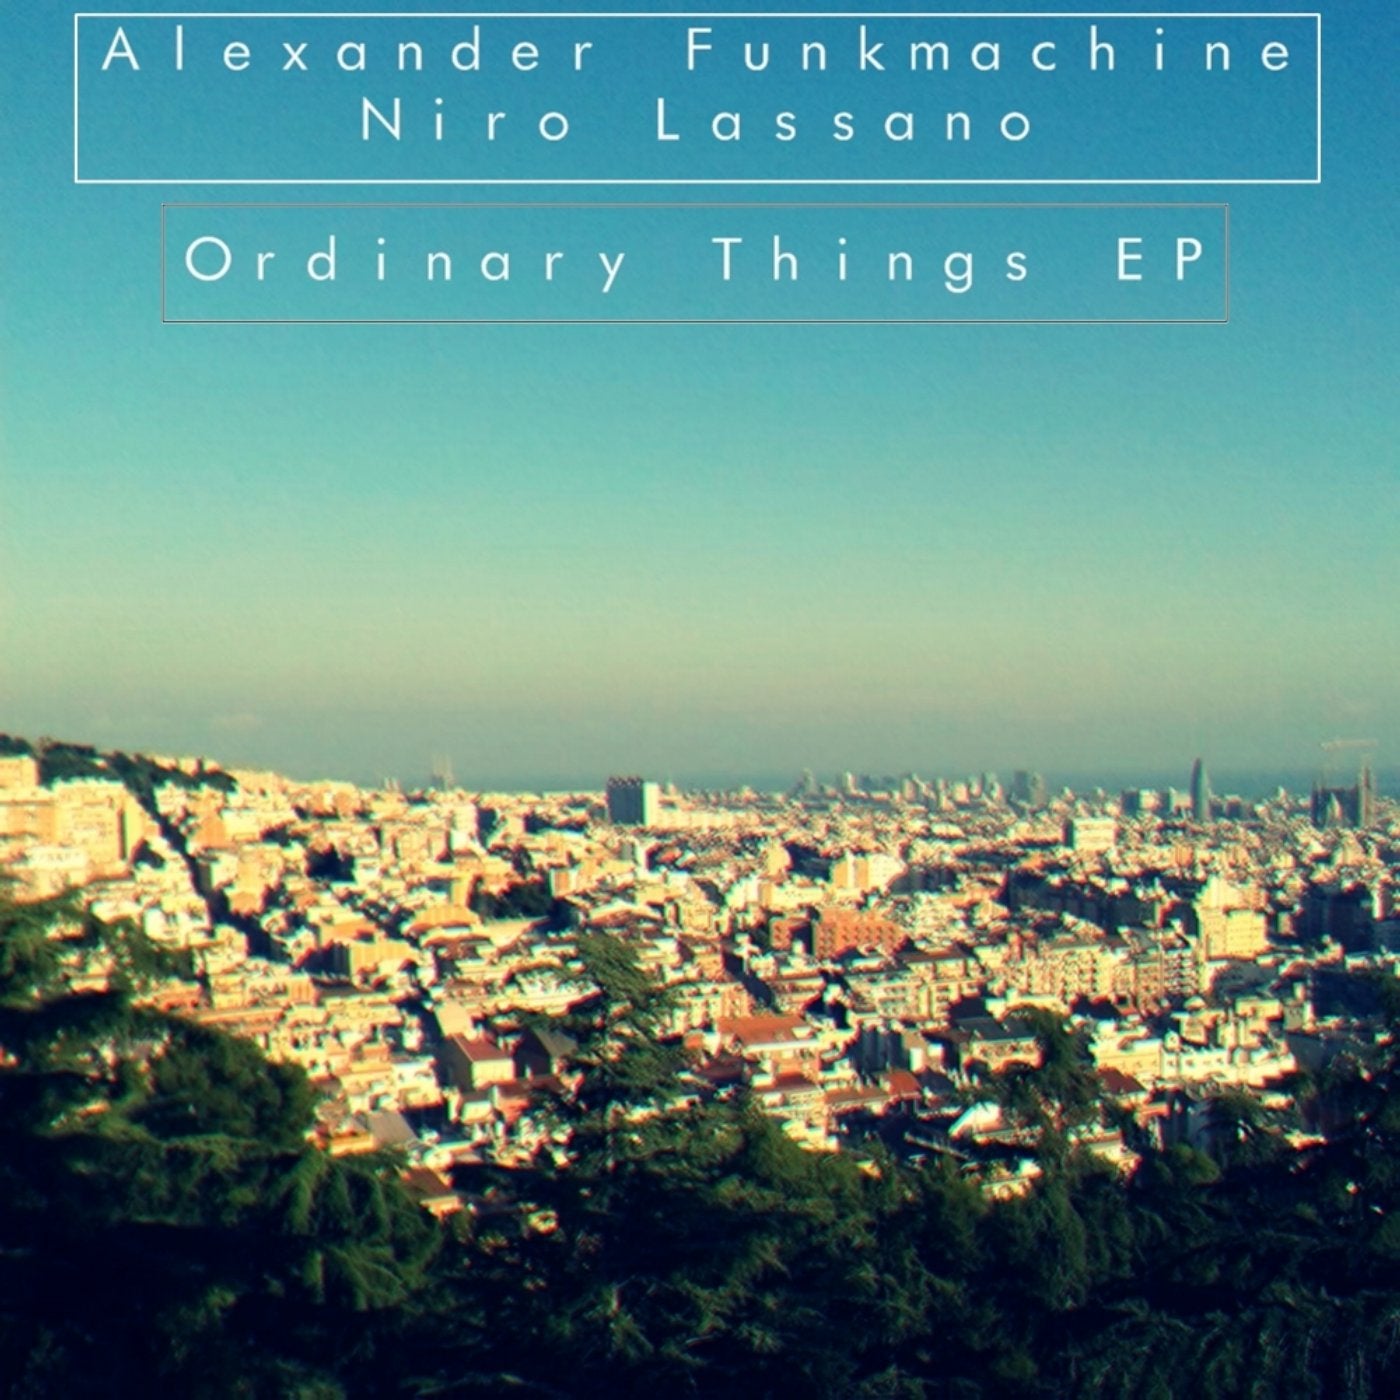 Ordinary Things EP